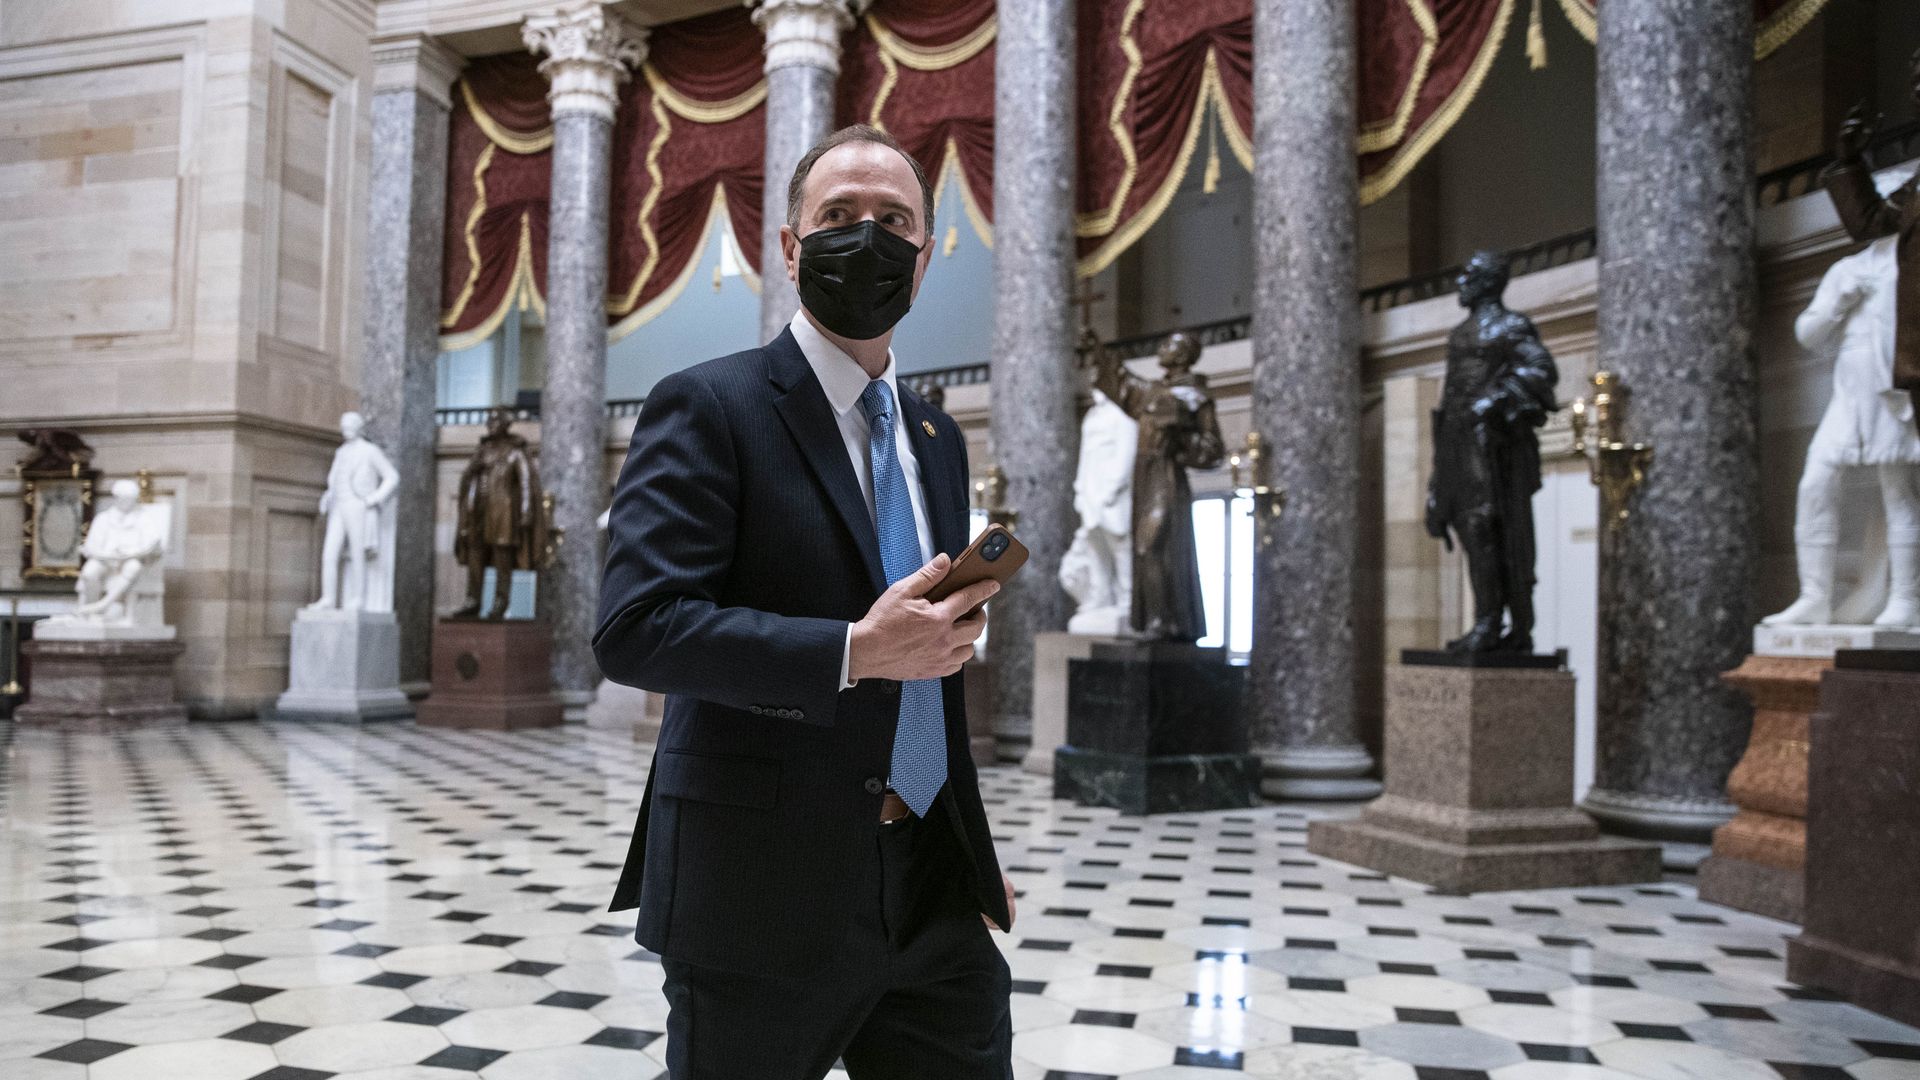 Rep. Adam Schiff is seen walking through Statuary Hall in the U.S. Capitol.